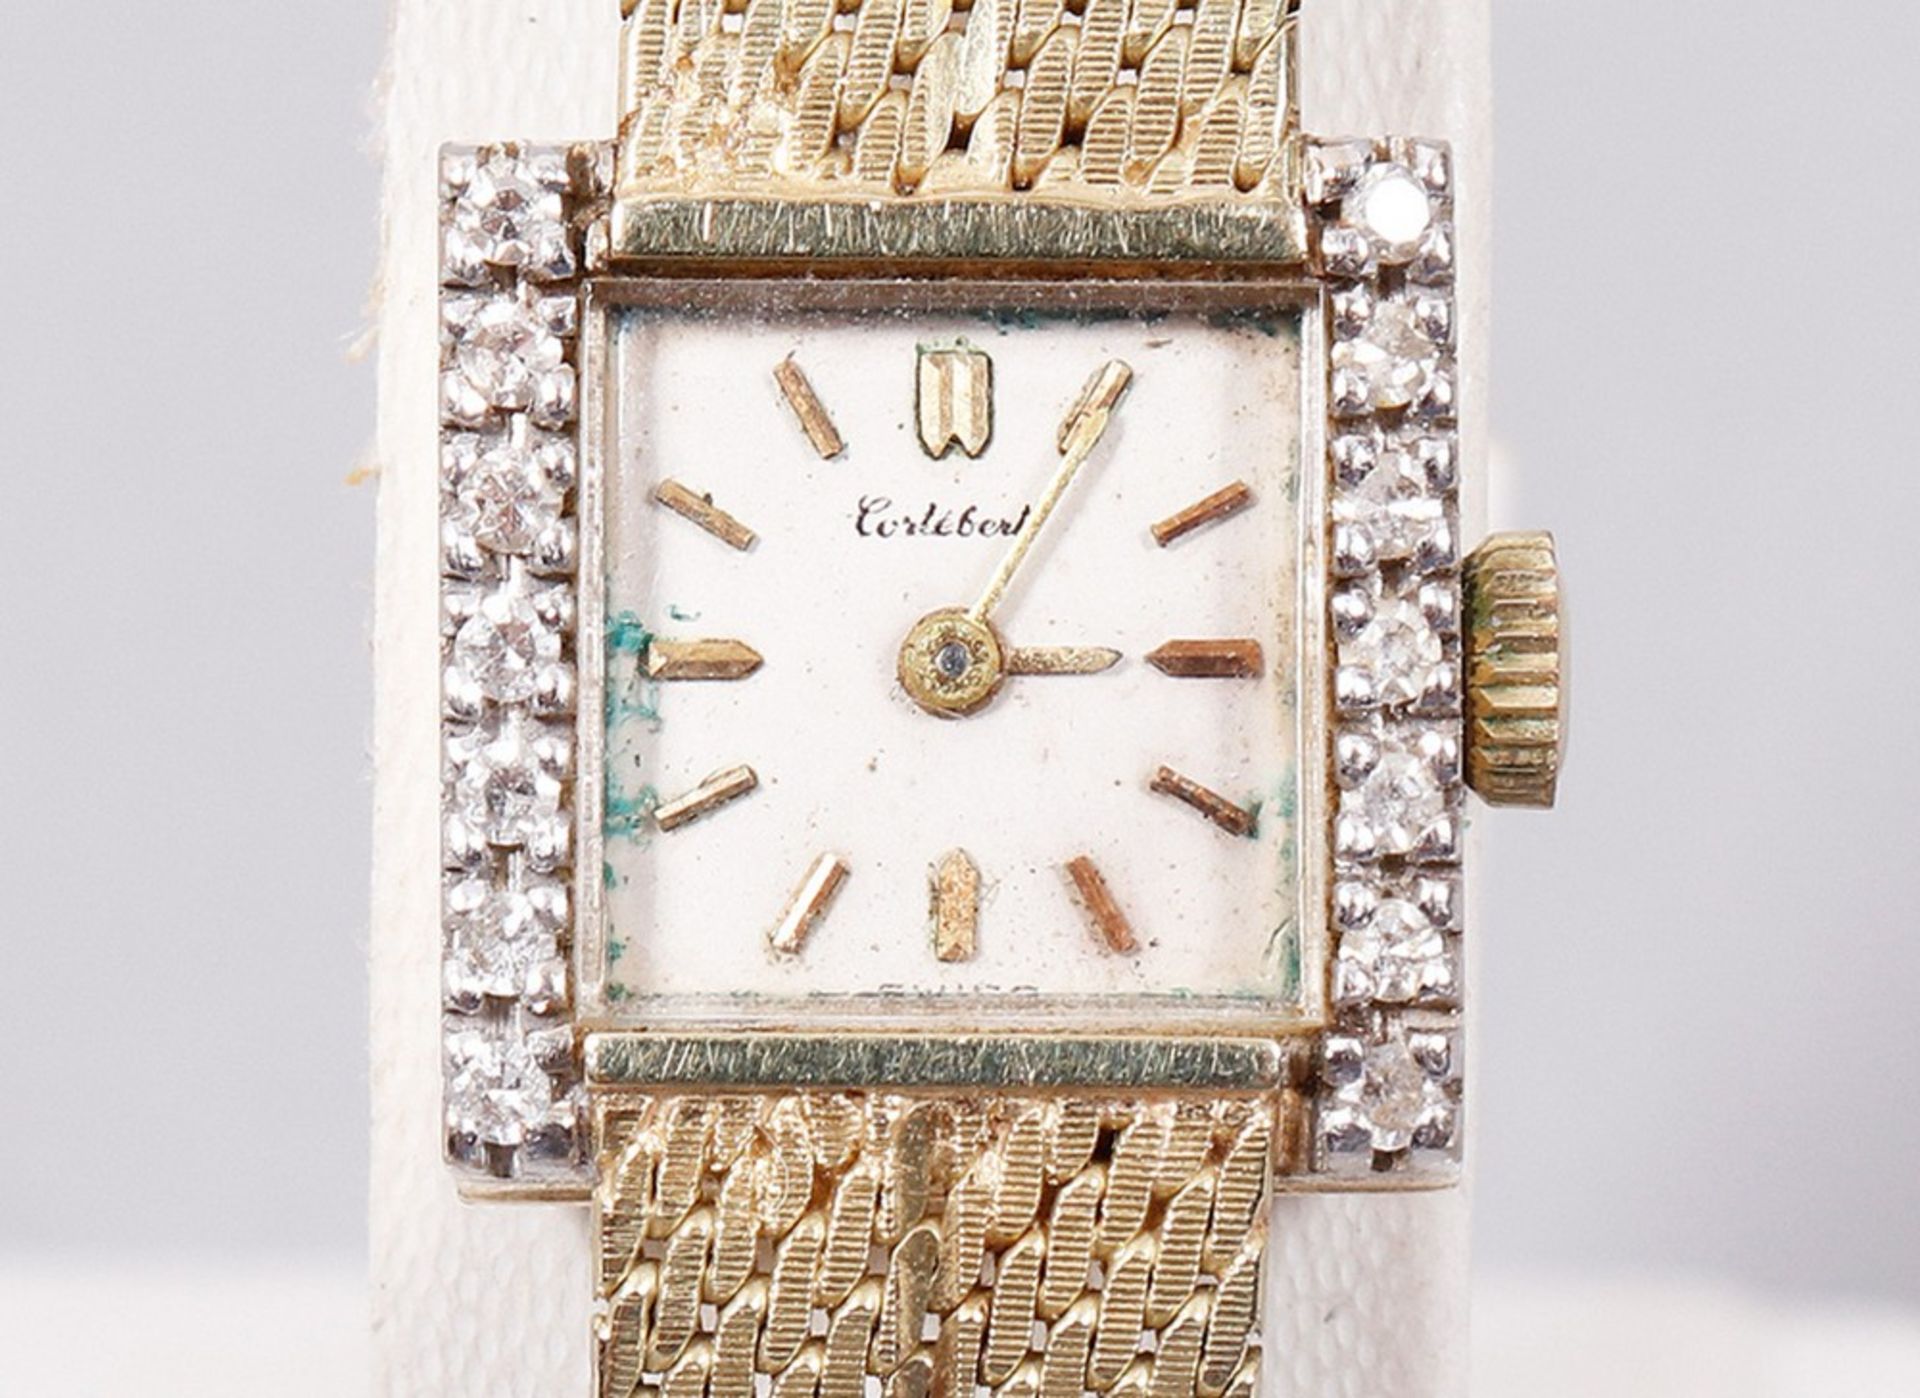 Ladies' wristwatch, 585 yellow gold, Cortébert - Image 2 of 4